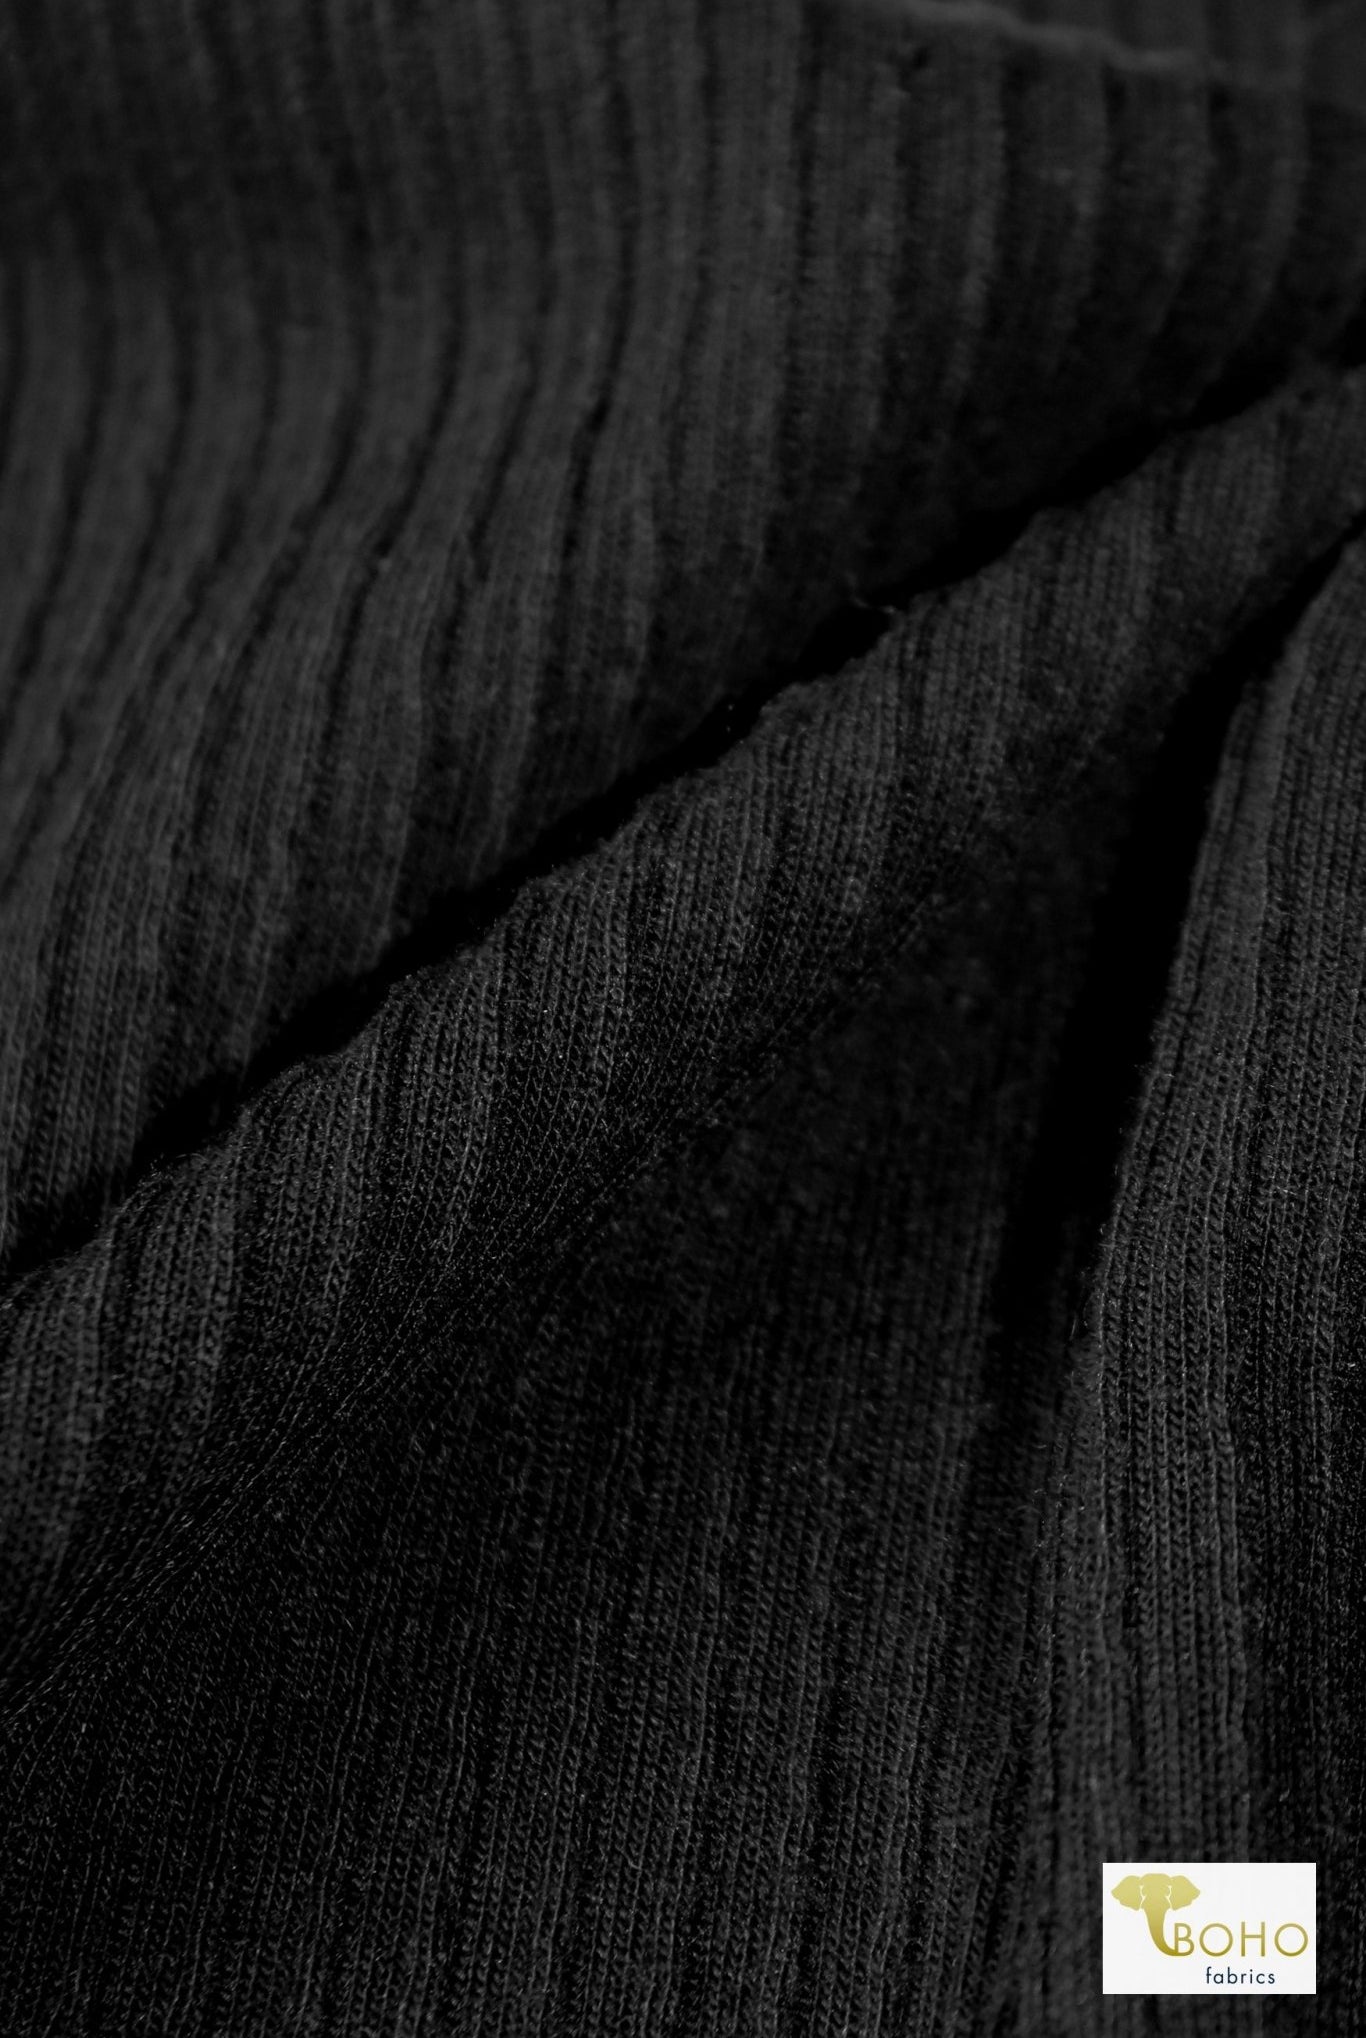 Black Ruffle, Rib Knit Fabric - Boho Fabrics